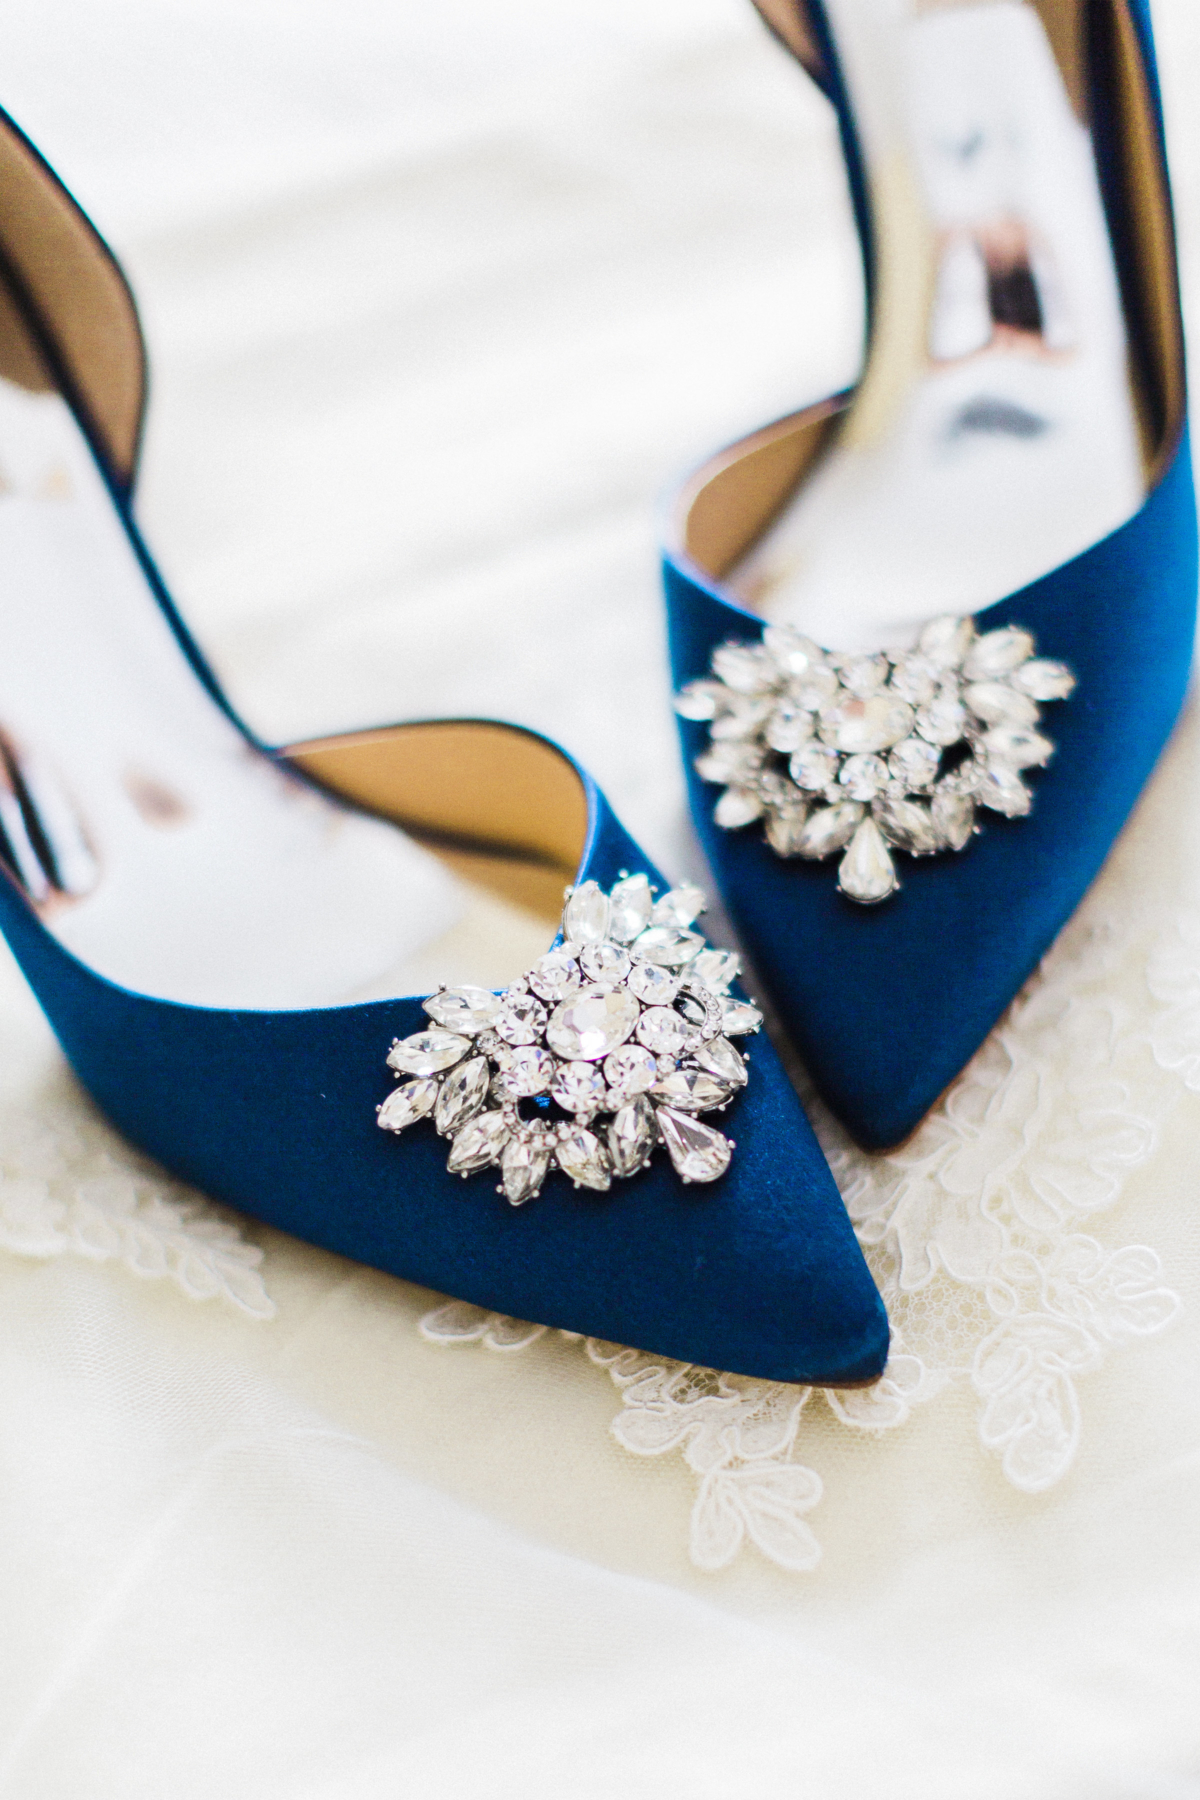 Blue Badgley Mischka Shoes - Elizabeth Anne Designs: The Wedding Blog